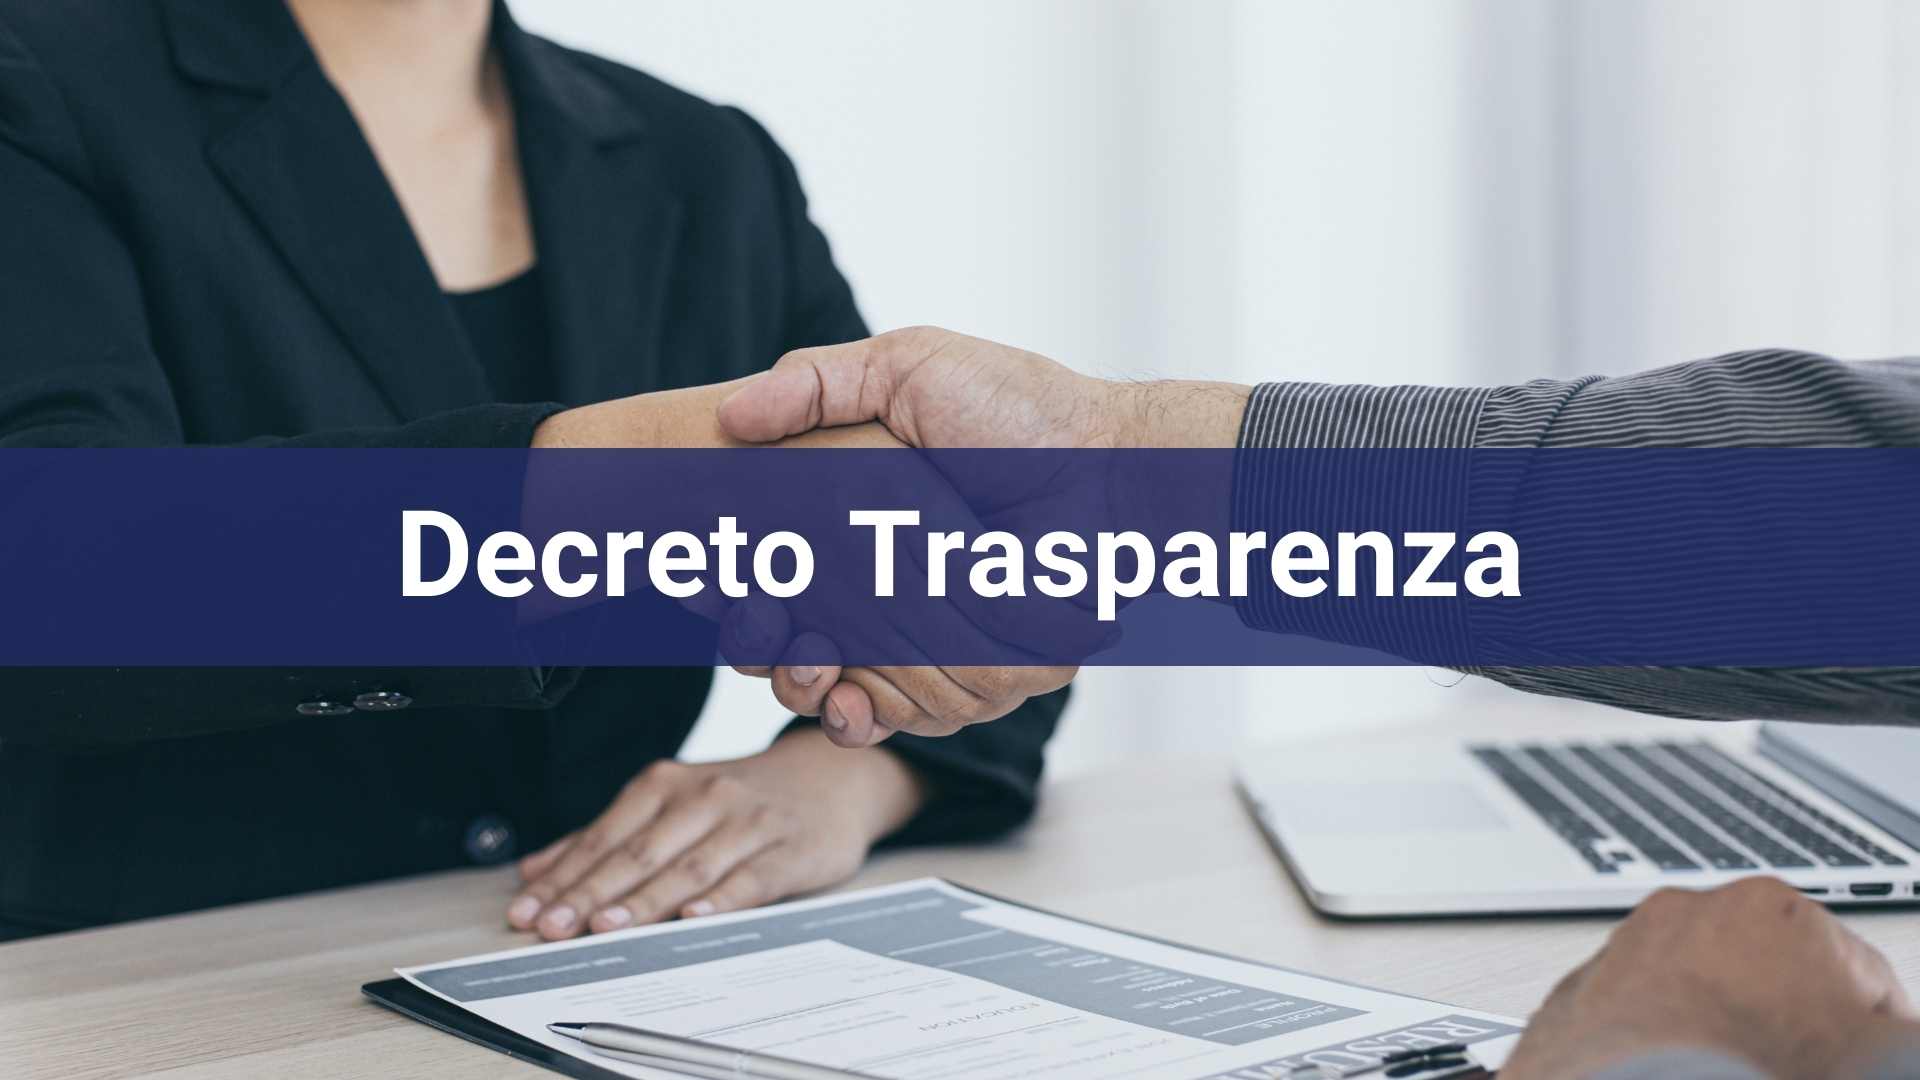 Decreto Trasparenza v2